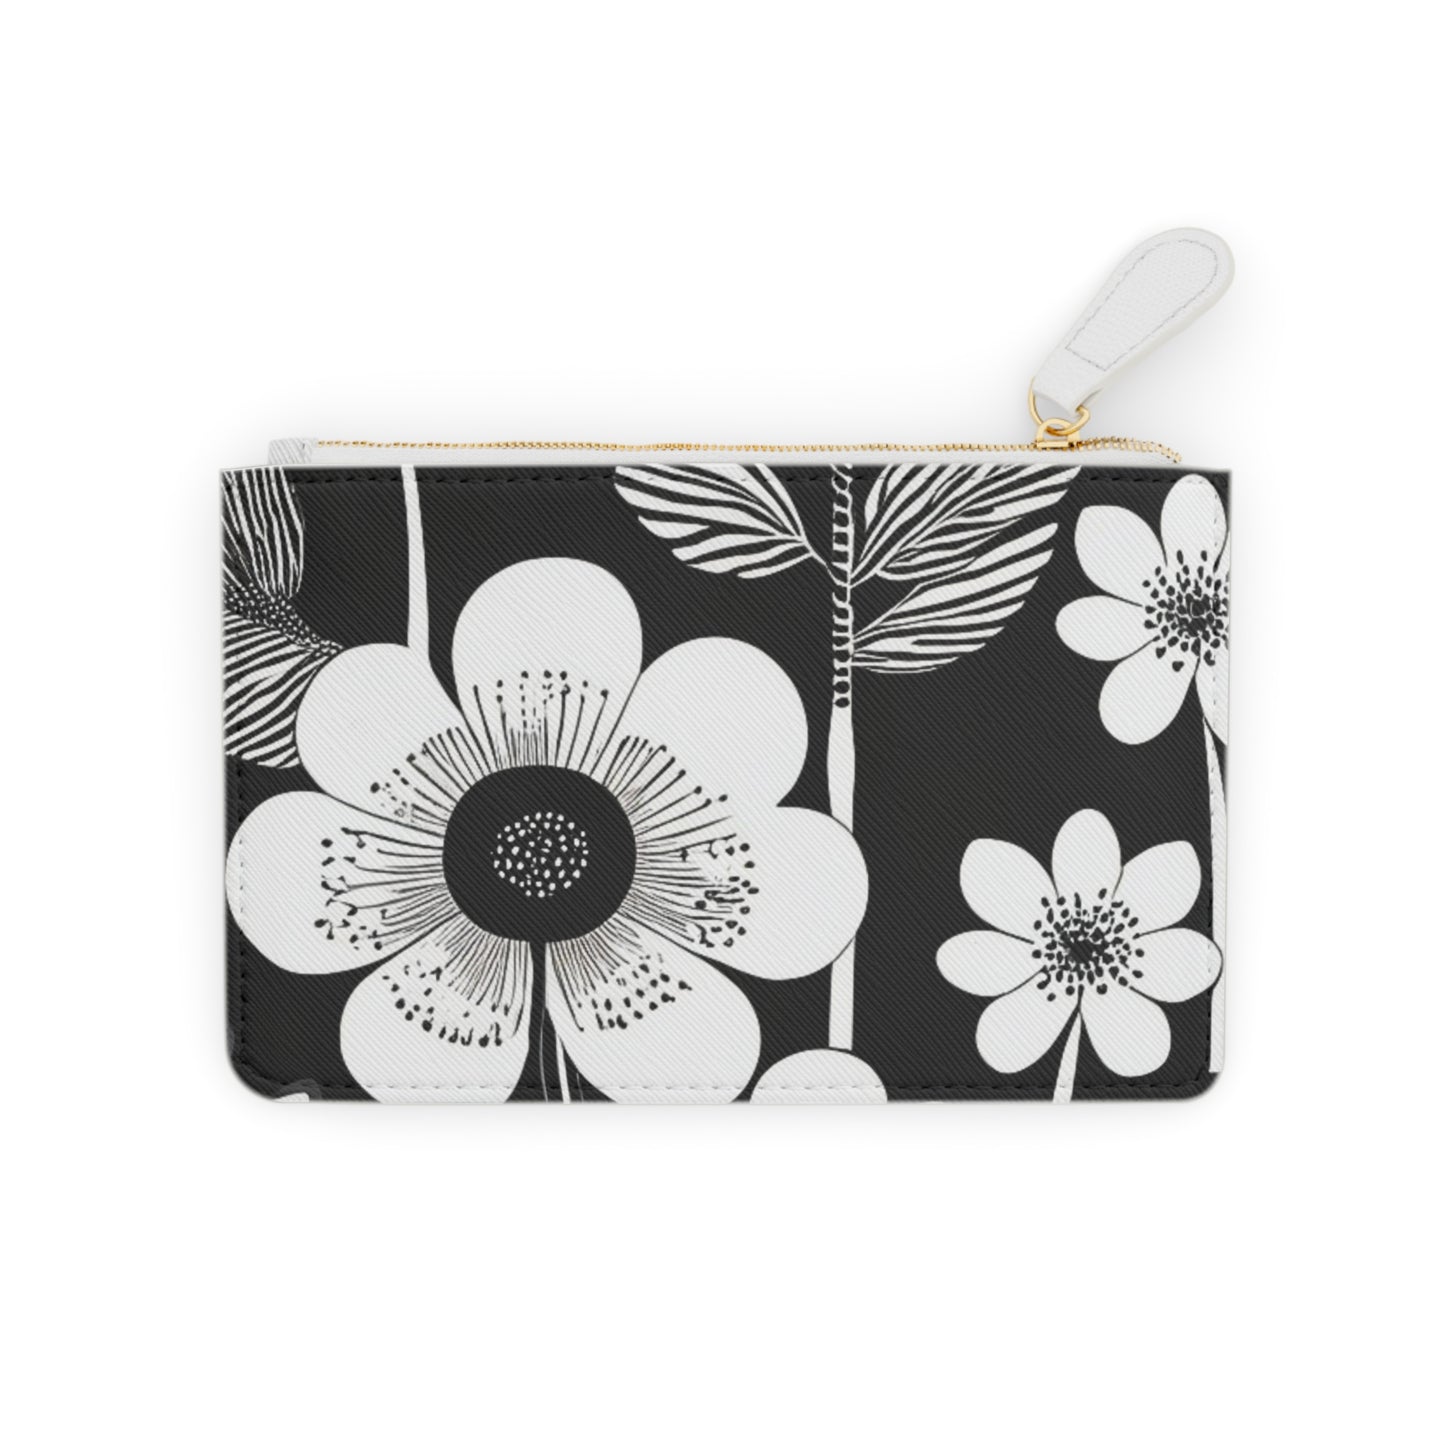 Black and White Poppies Mod Pop Art Lipstick Mini Pouch Clutch Bag